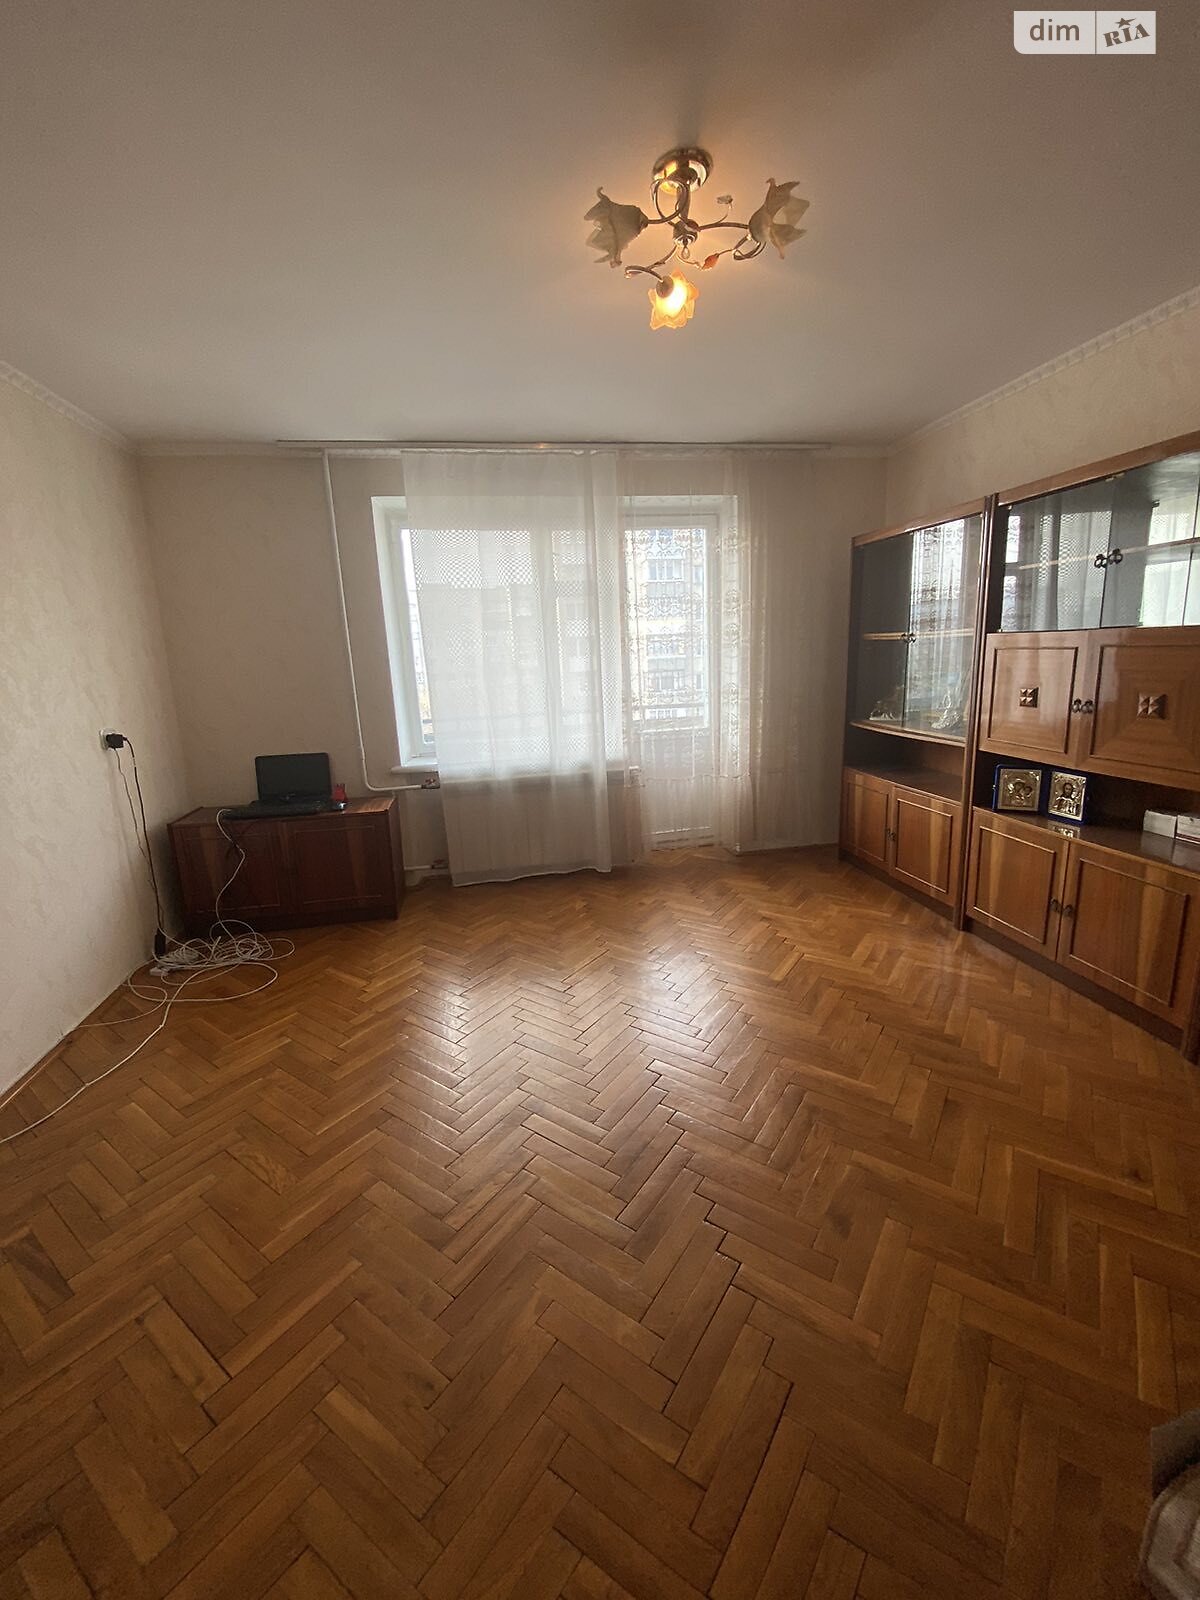 Продажа трехкомнатной квартиры в Луцке, на ул. Ветеранов, район 33 микрорайон фото 1